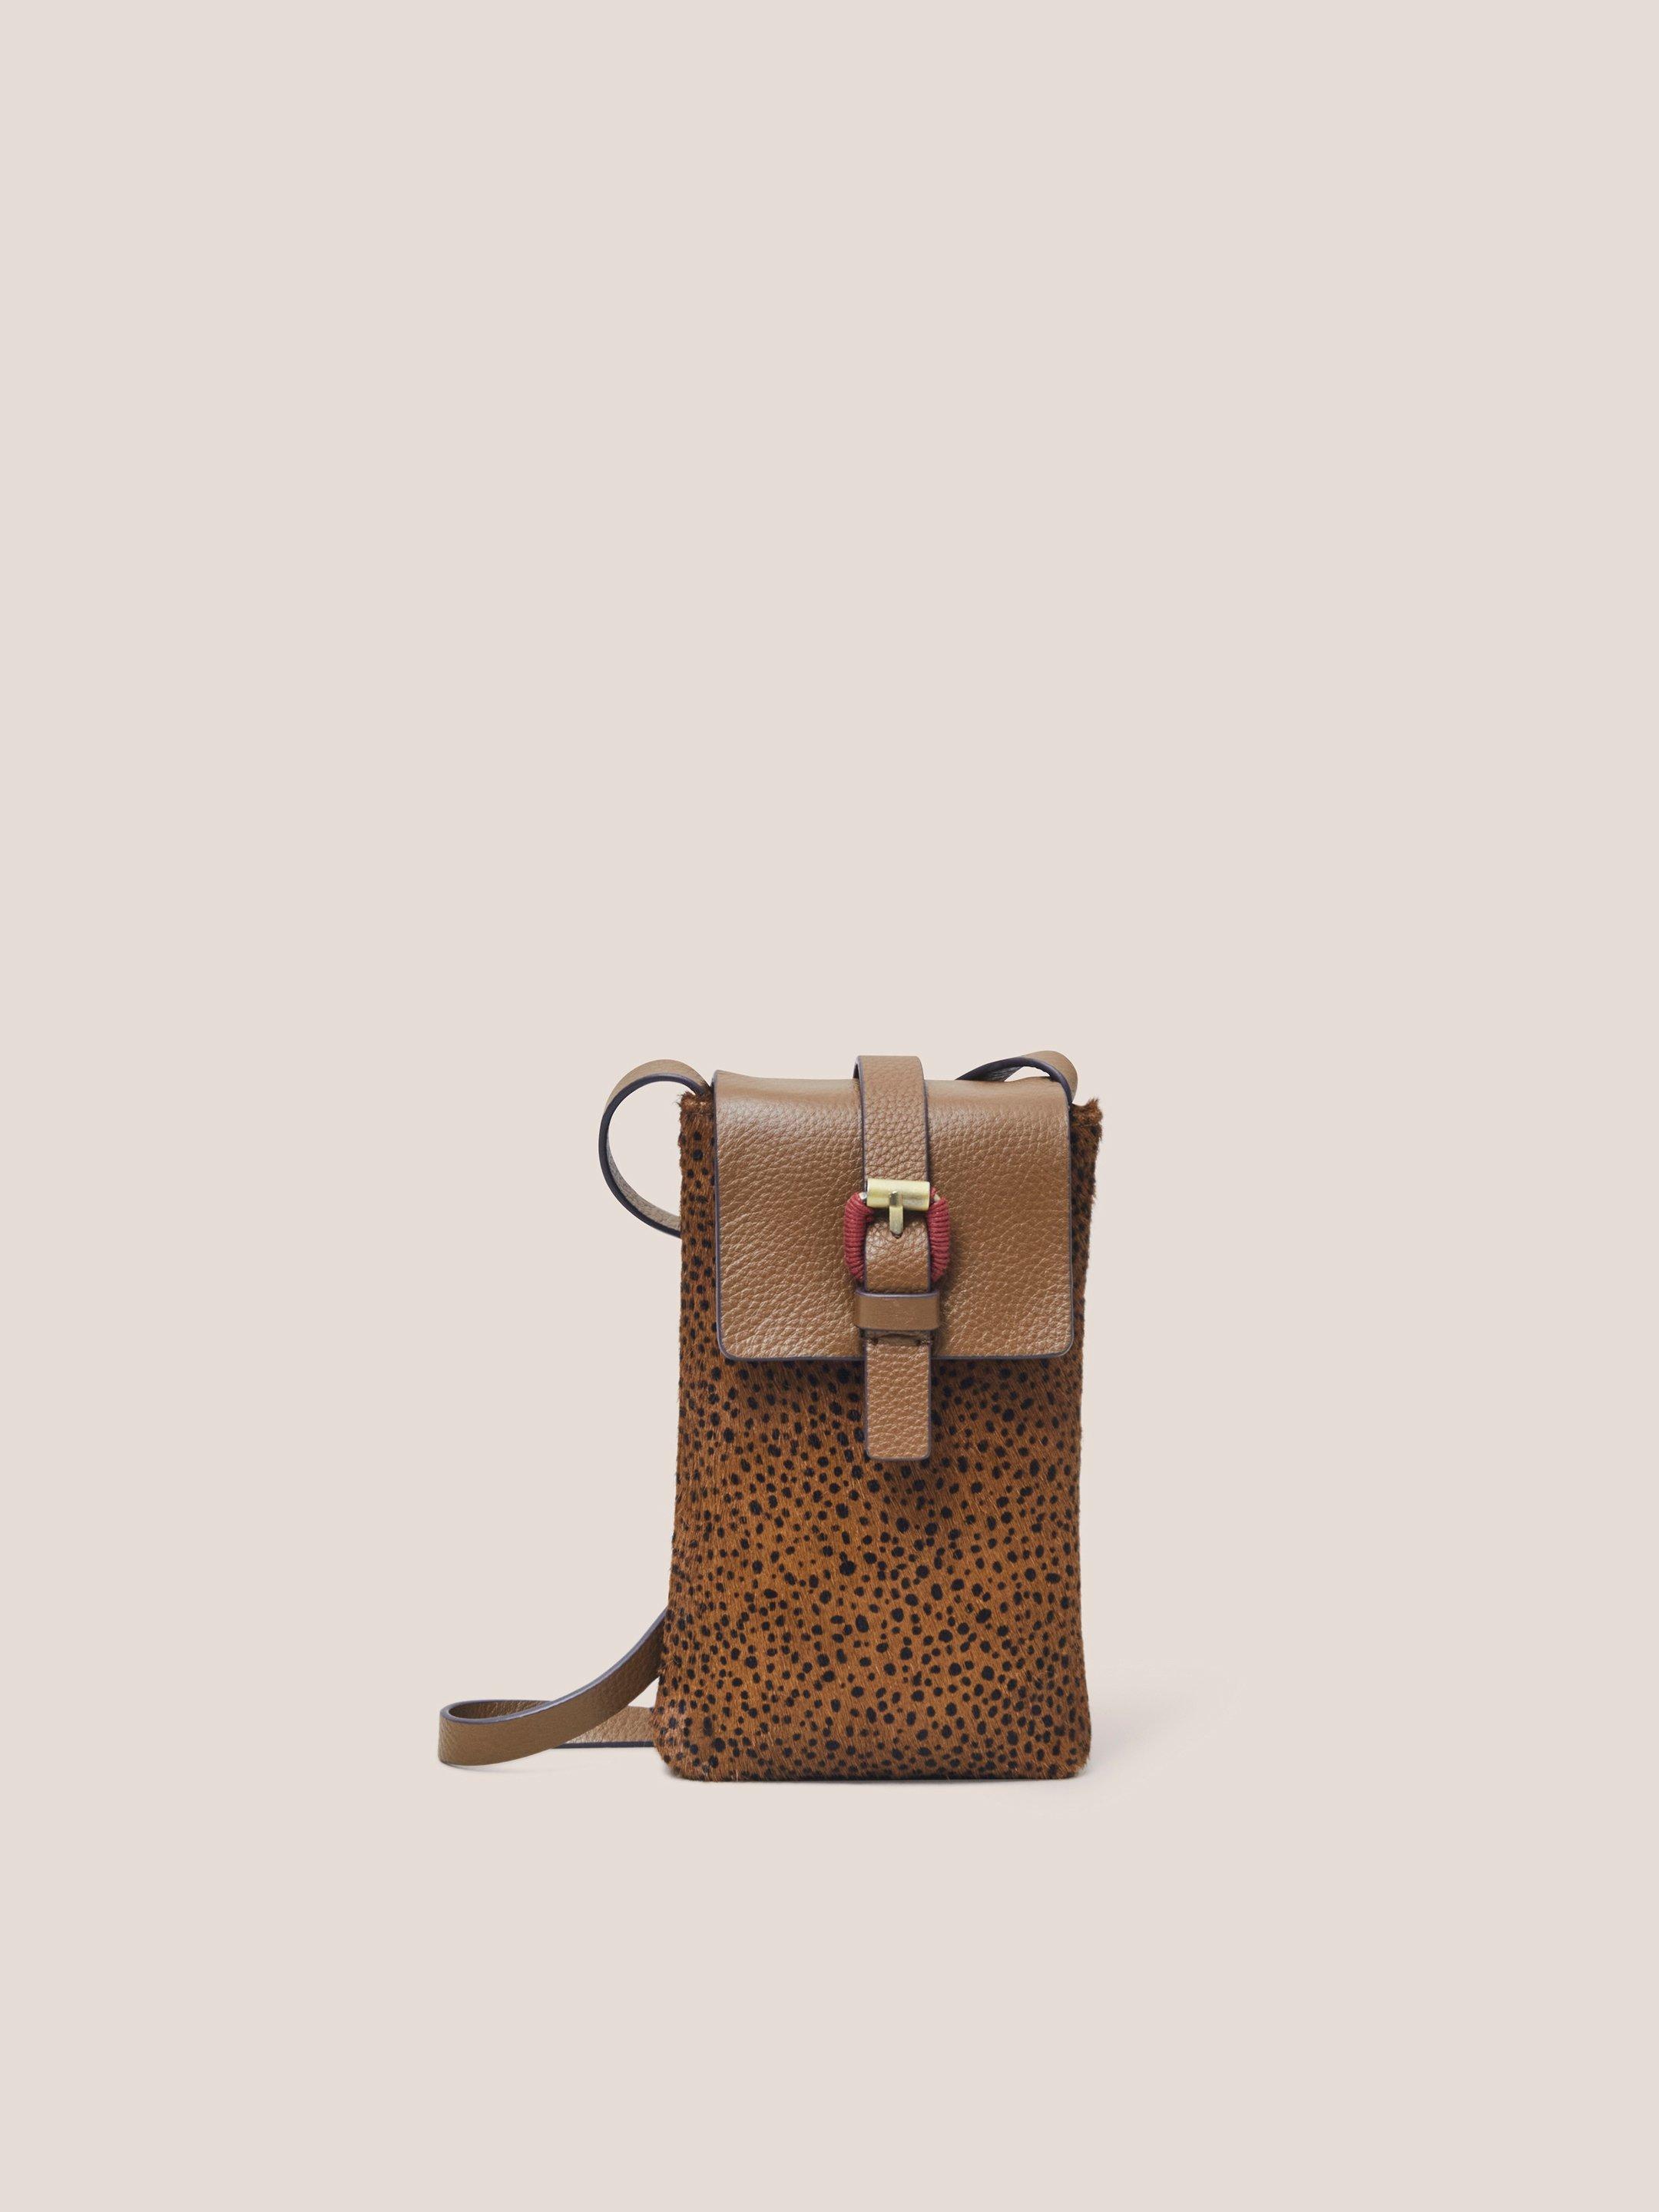 Clara Buckle Leather Phone Bag in TAN PR - MODEL FRONT